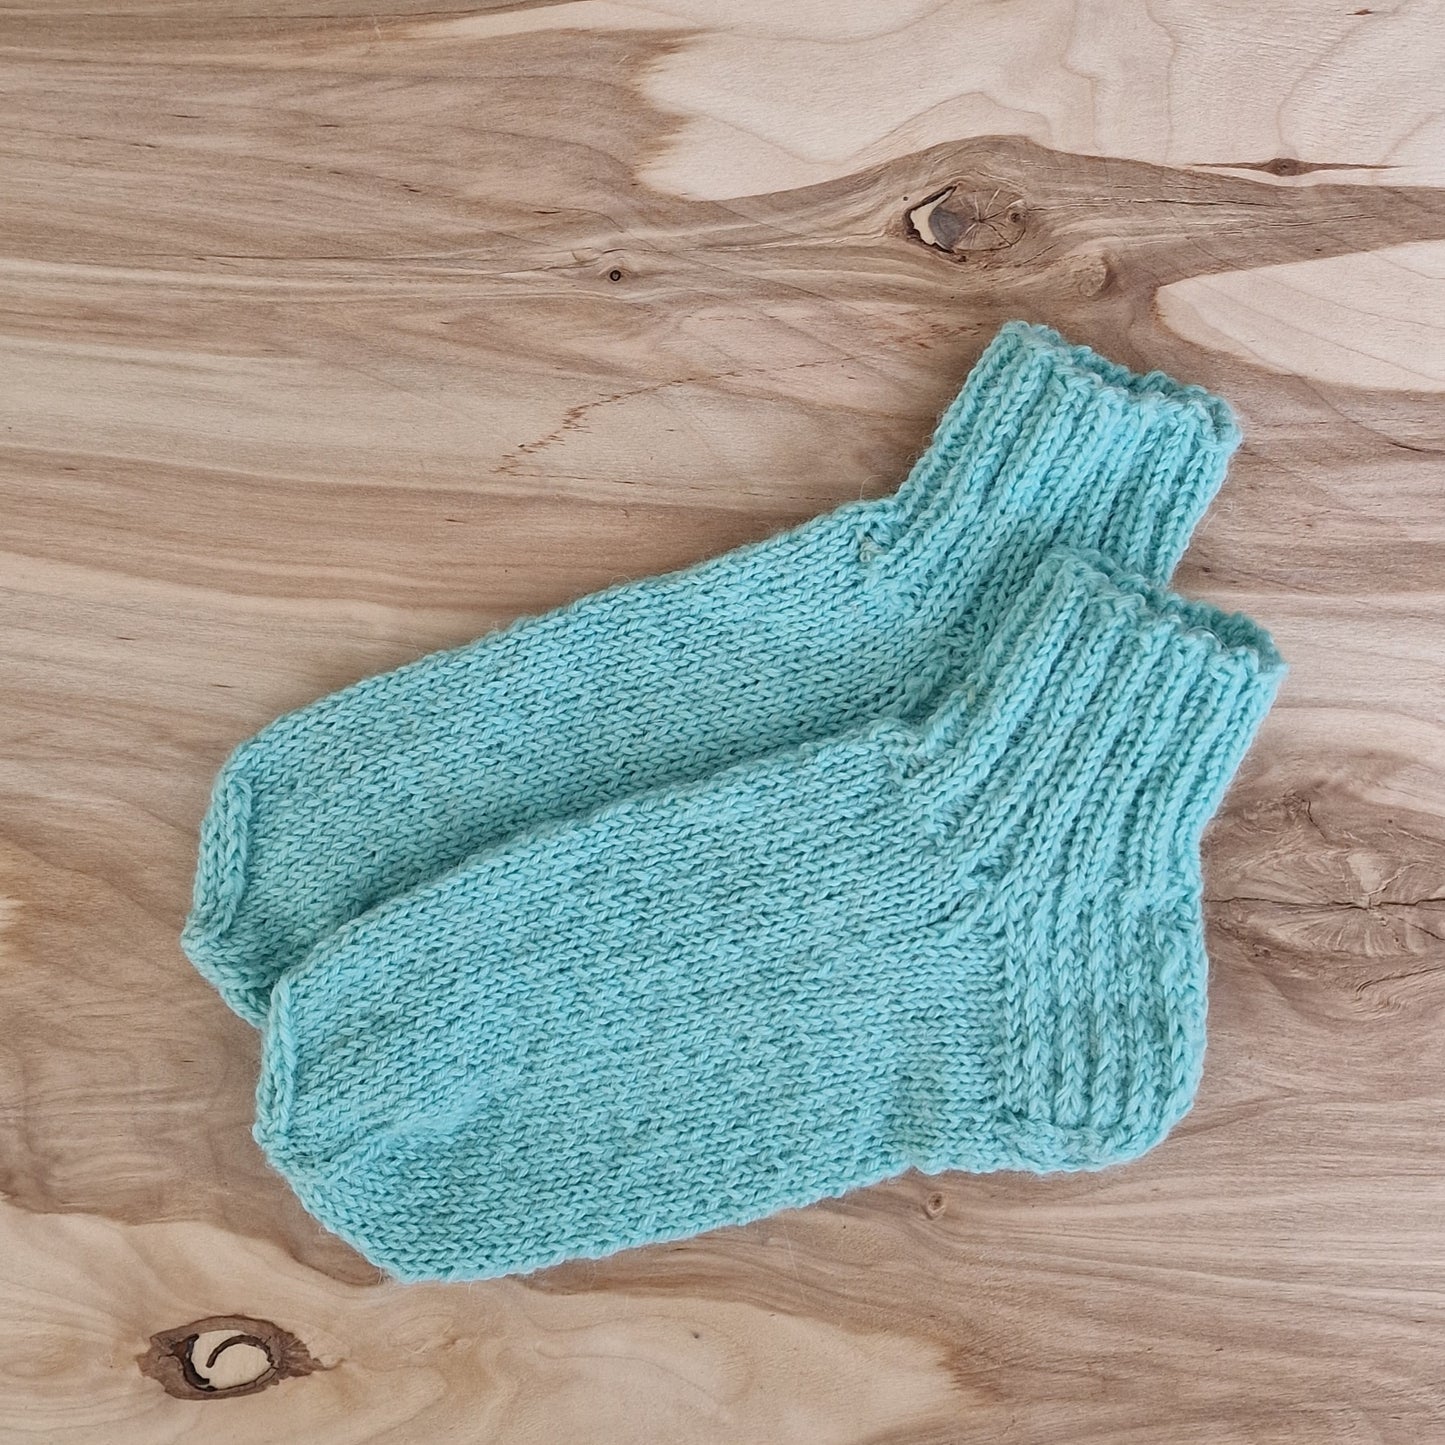 Light blue green children's woolen socks 31-33. size (DASE 24)